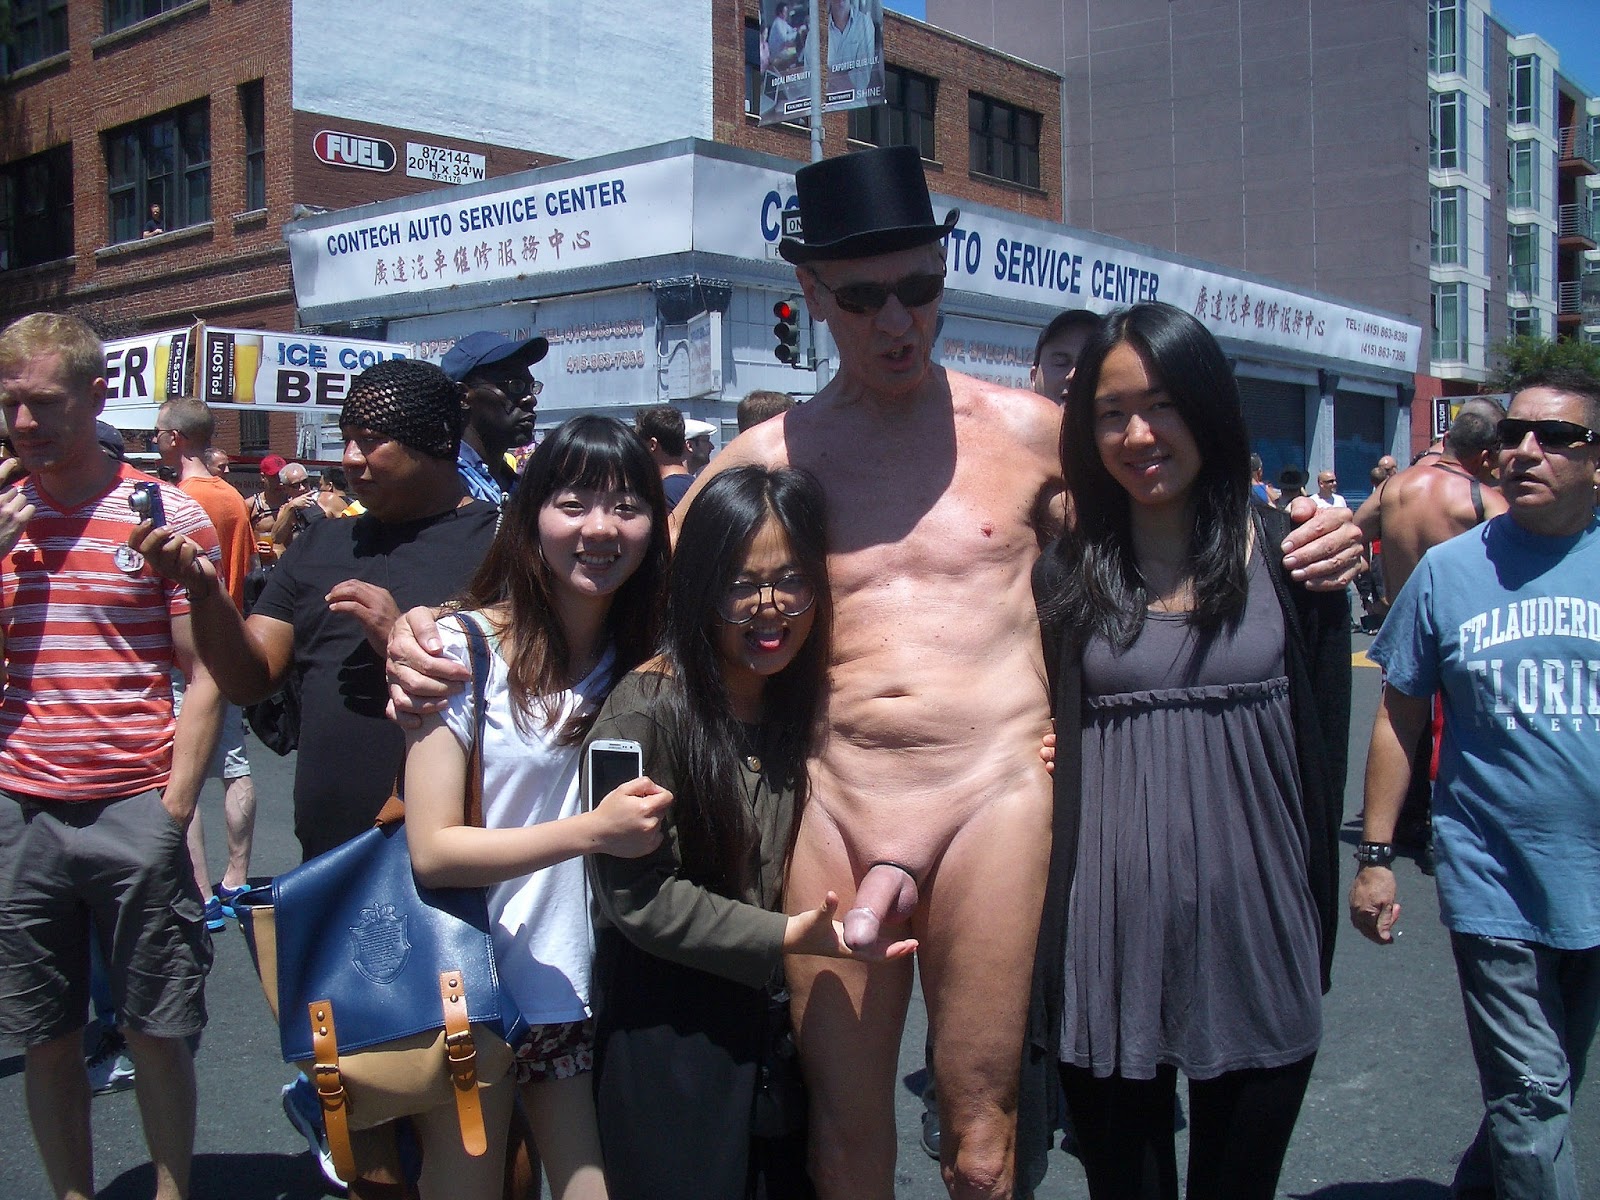 CFNM Star -Clothed female nude male femdom feminist blog 202.